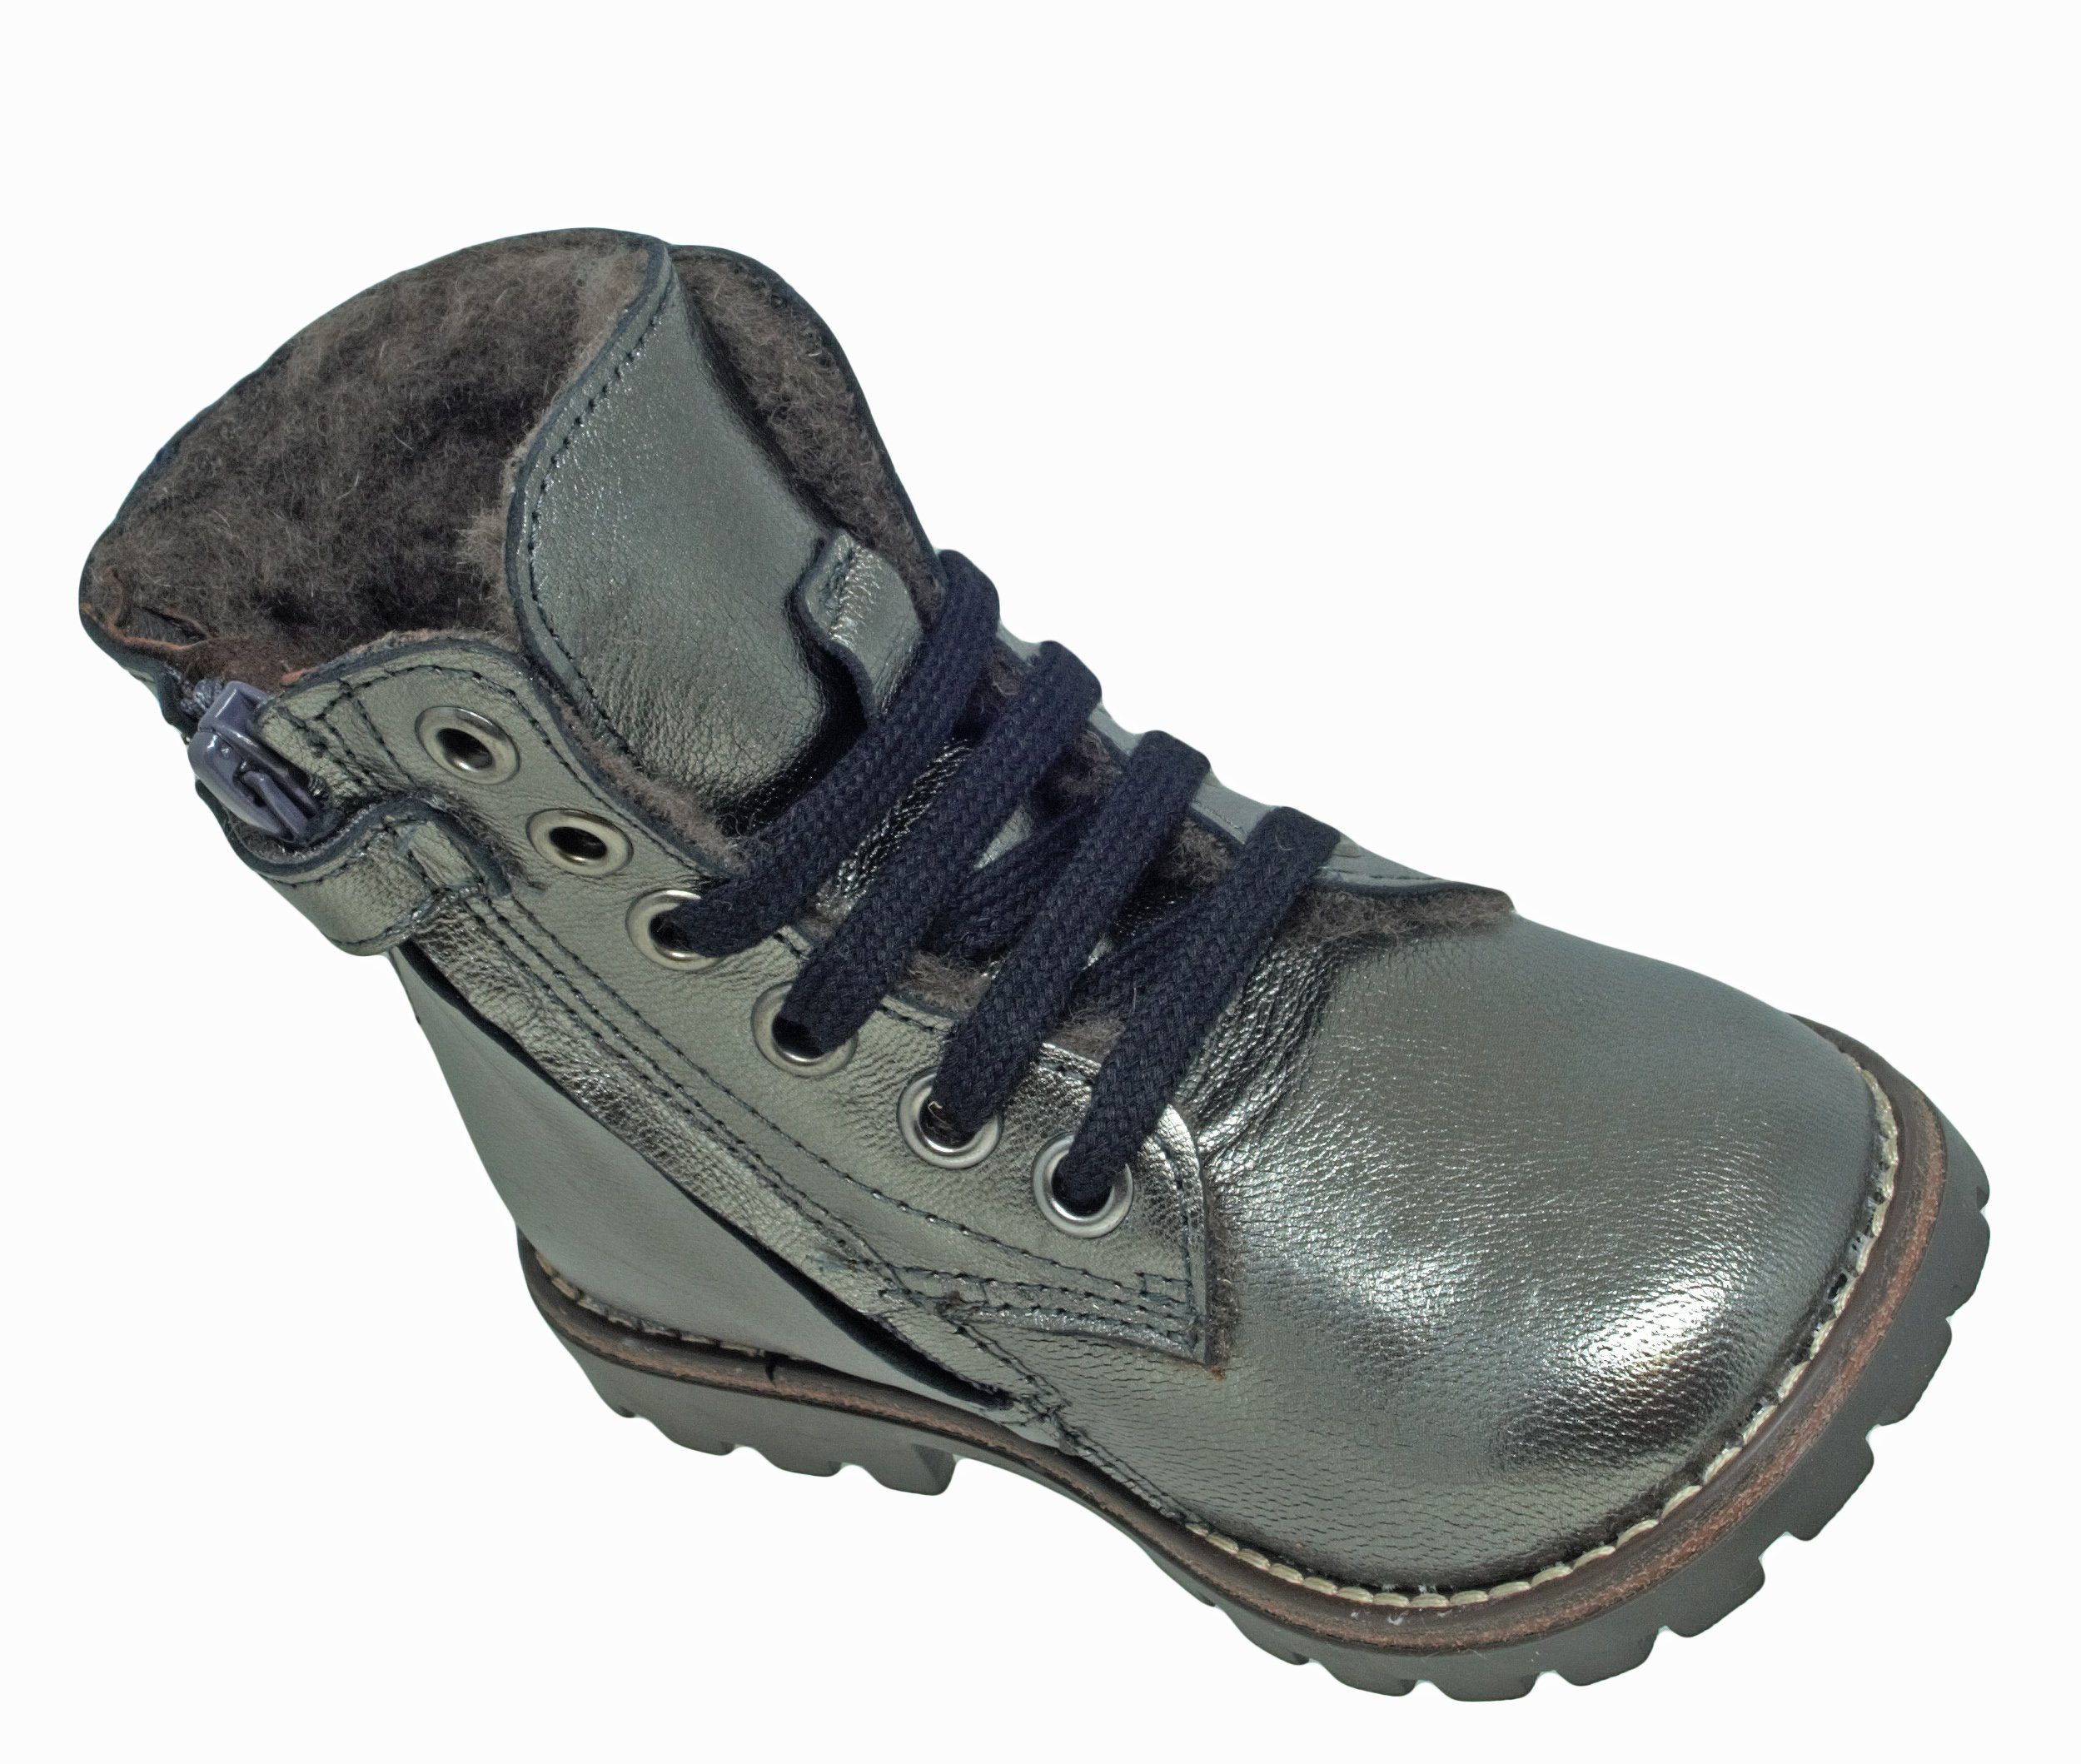 Clic Clic Stiefeletten Schnürstiefelette Leder Boots 9898 Lammfell